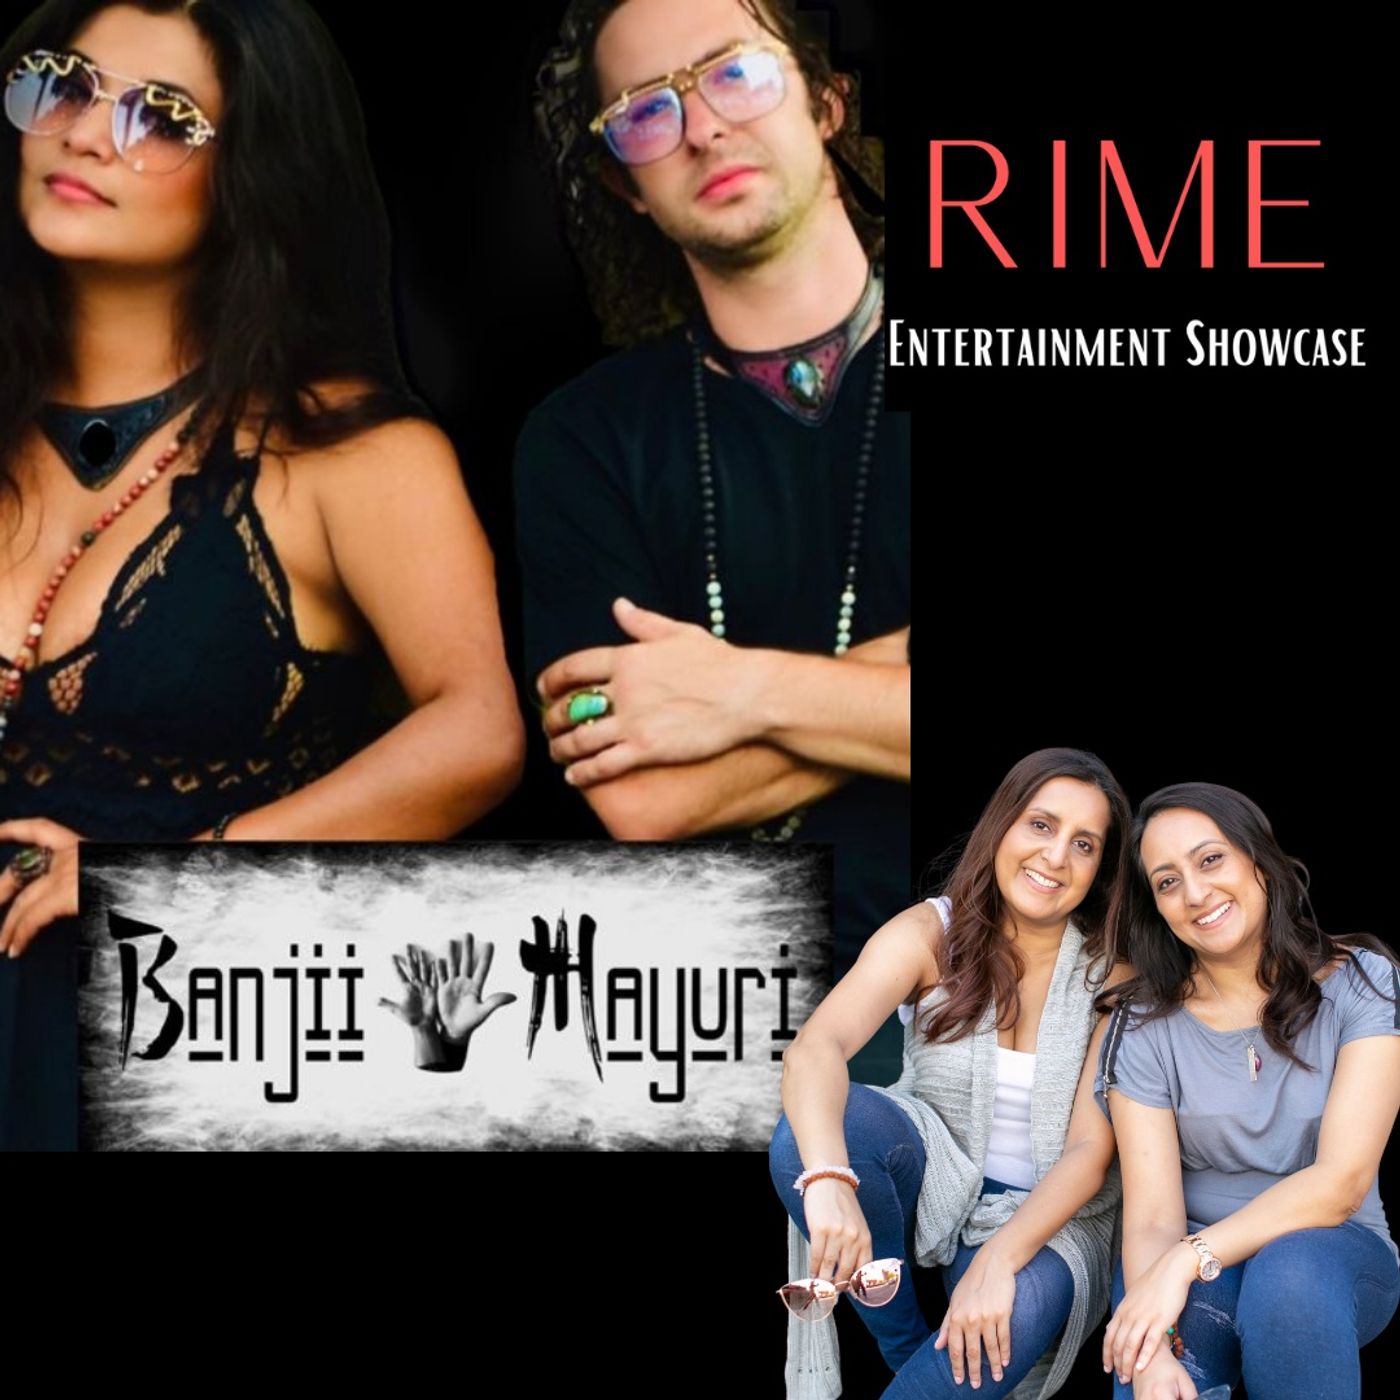 RIME Entertainment Showcase - Banjii and Mayuri Interview